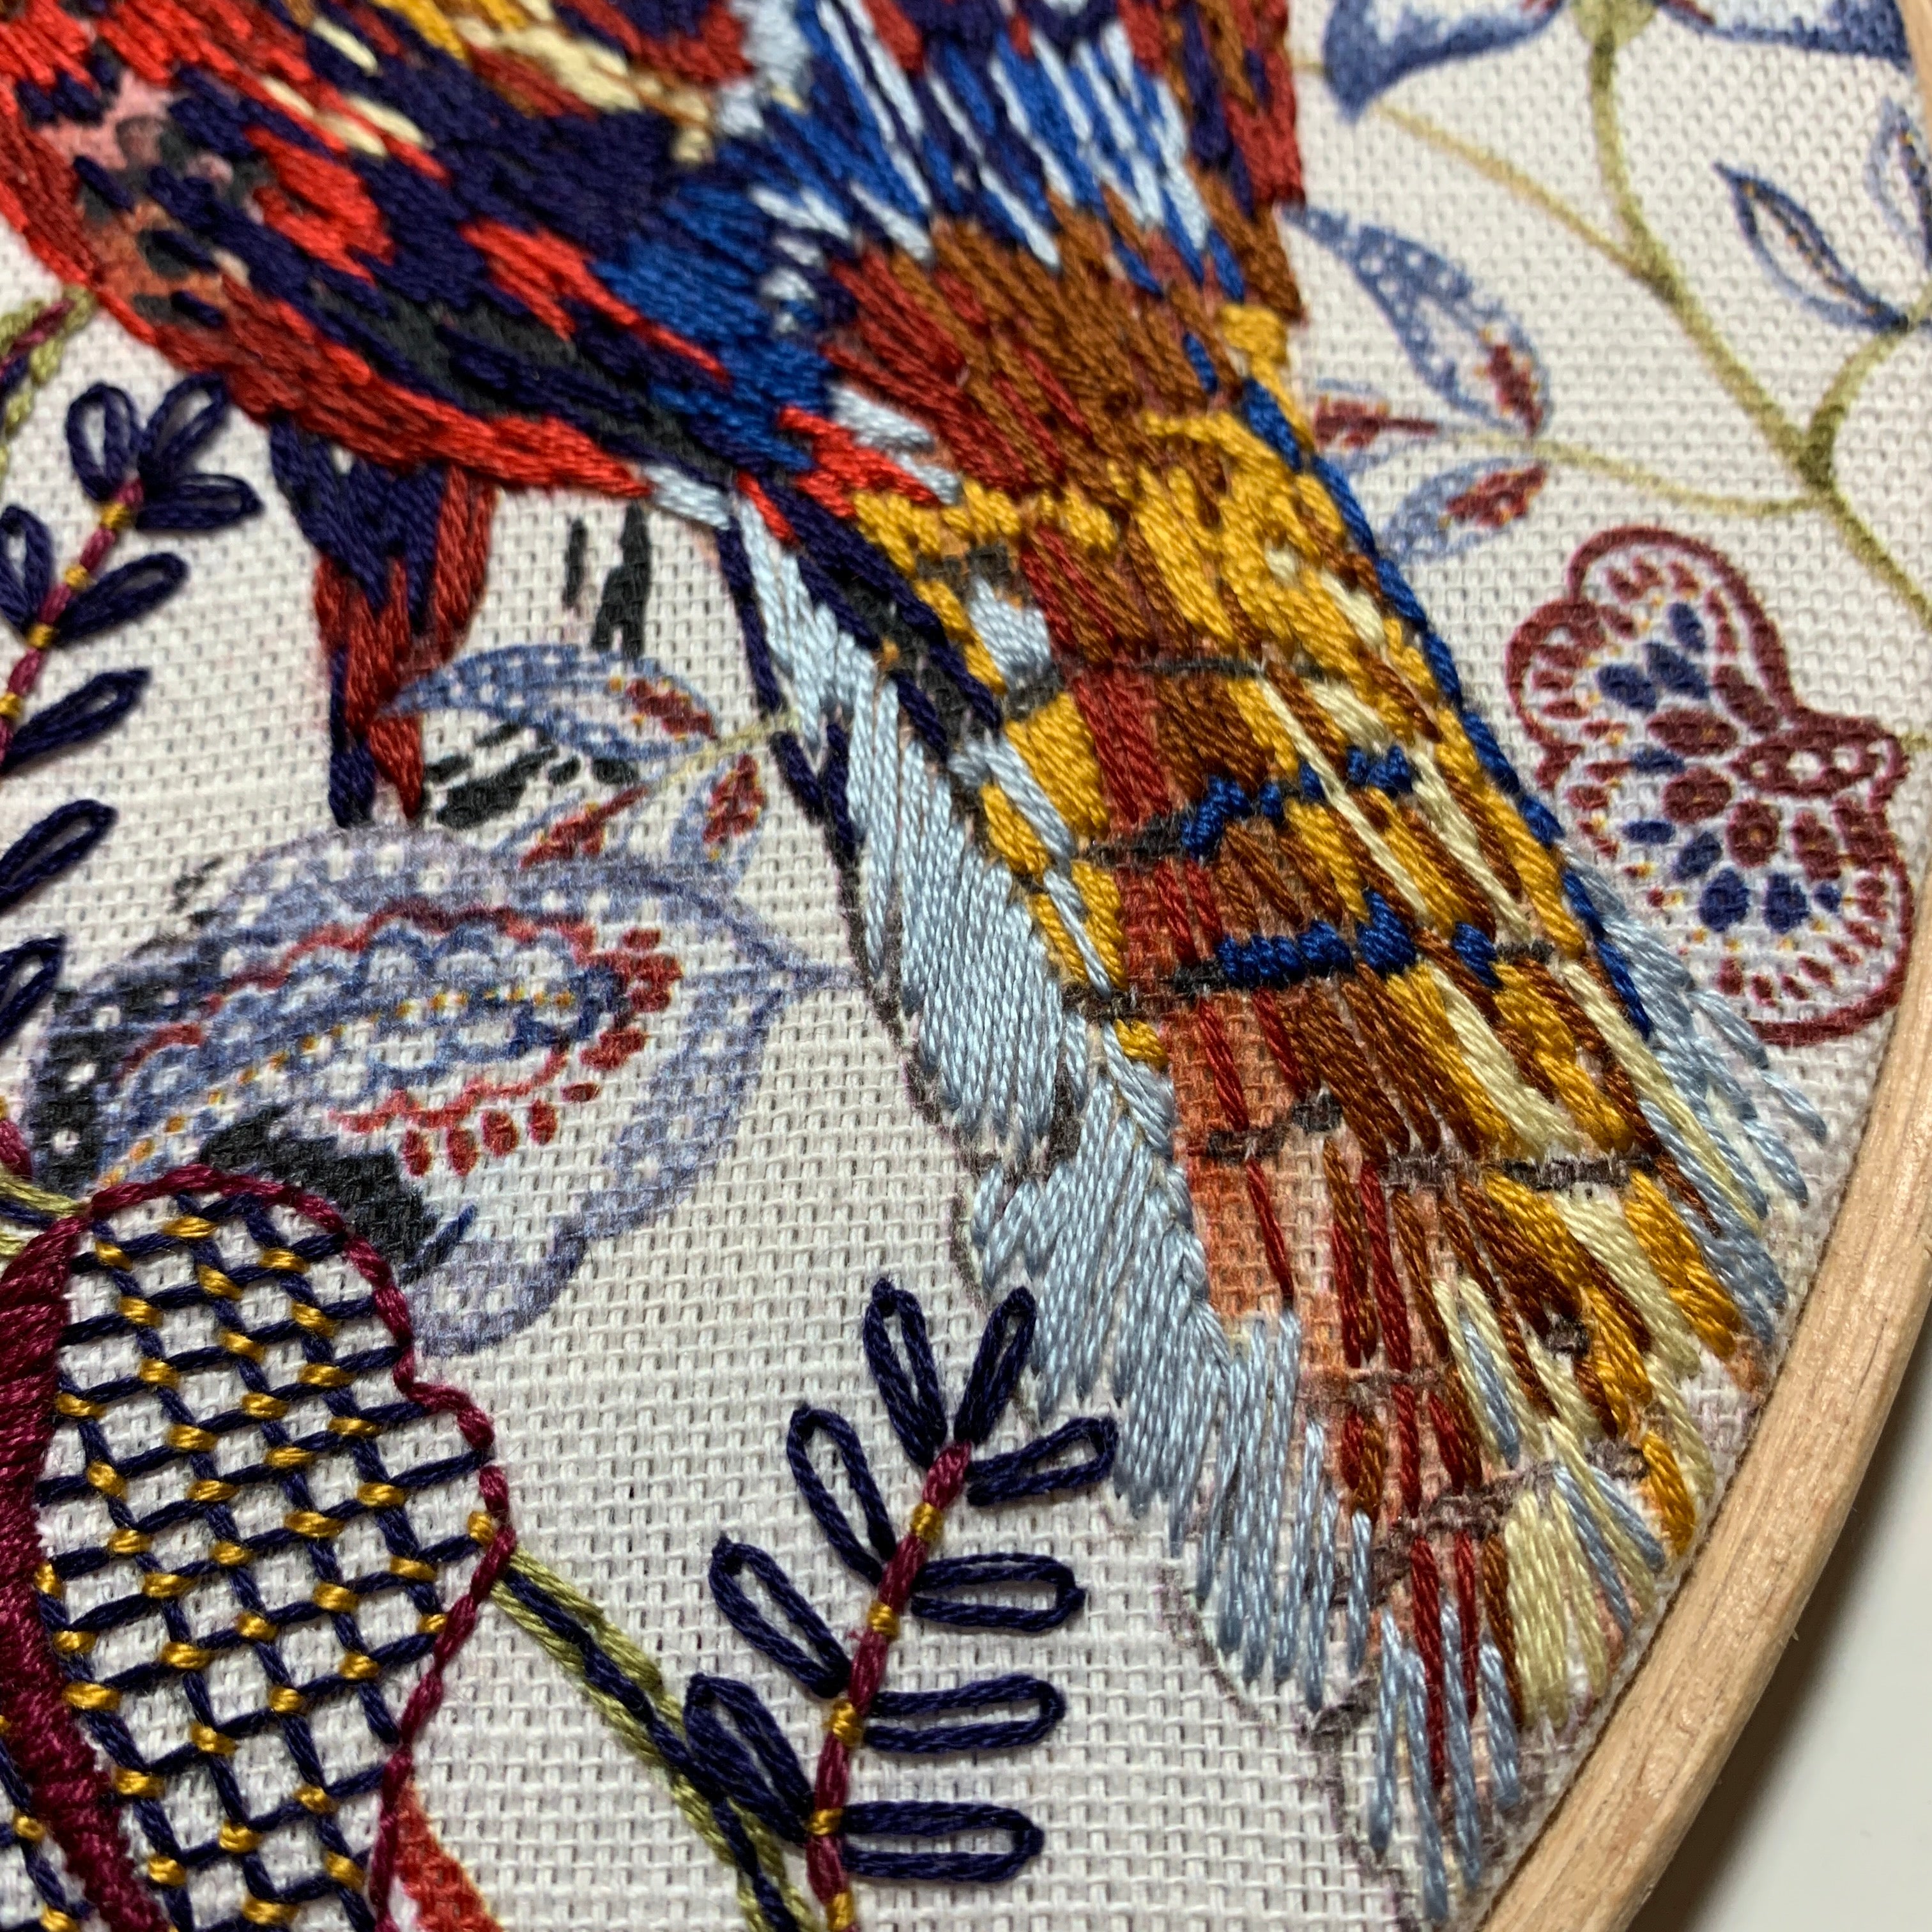 Chintz embroidery kit